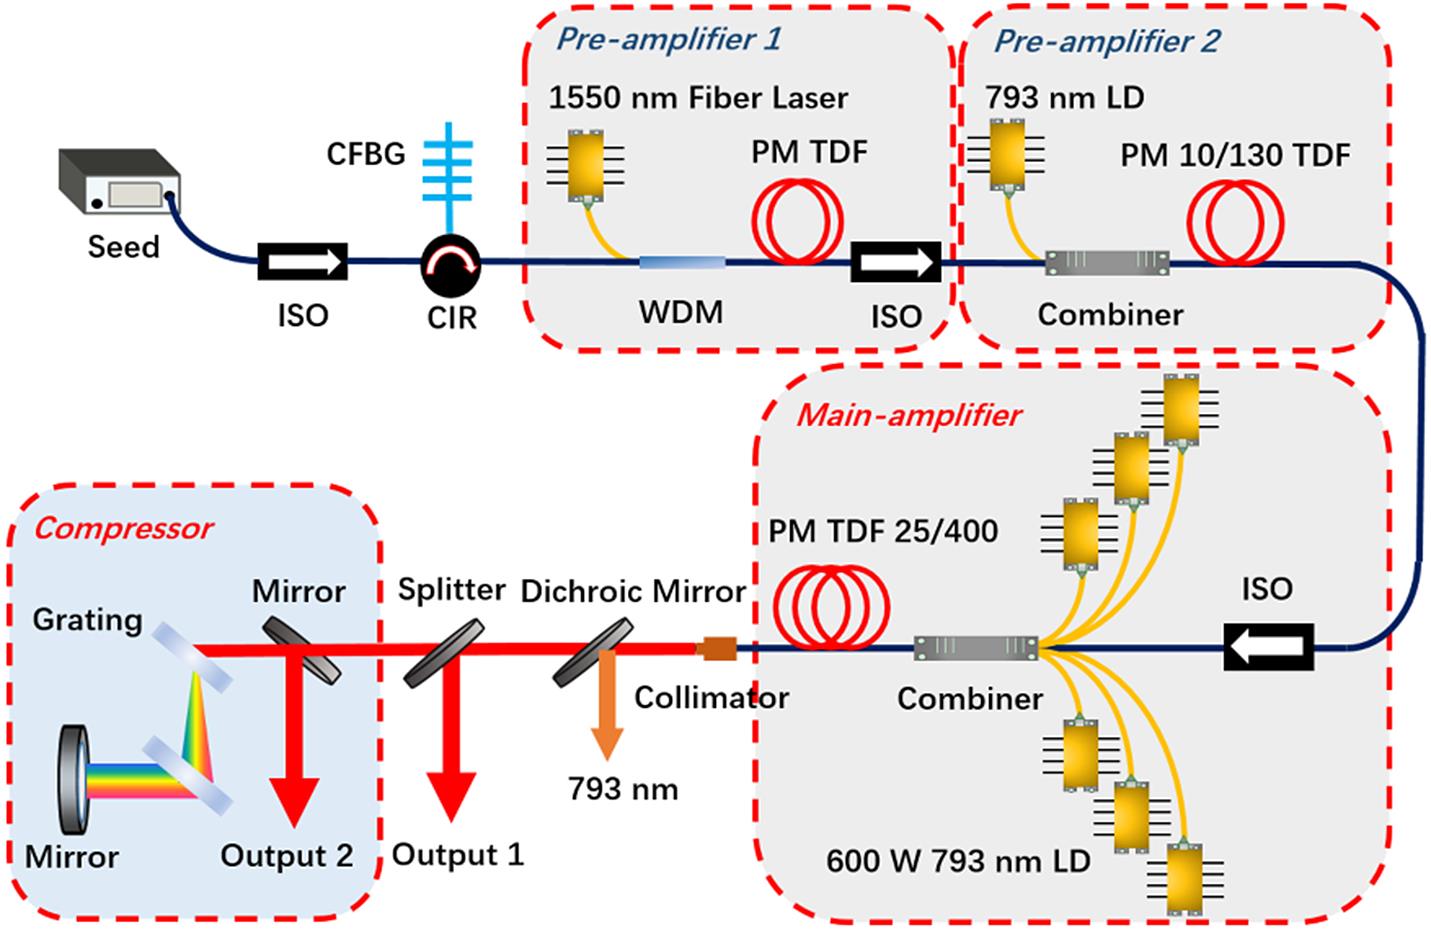 Experimental setup of the all-PM-TDF amplifier. LD, laser diode; ISO, isolator; CIR, circulator; CFBG, chirped fiber Bragg grating; WDM, wavelength division multiplexer.